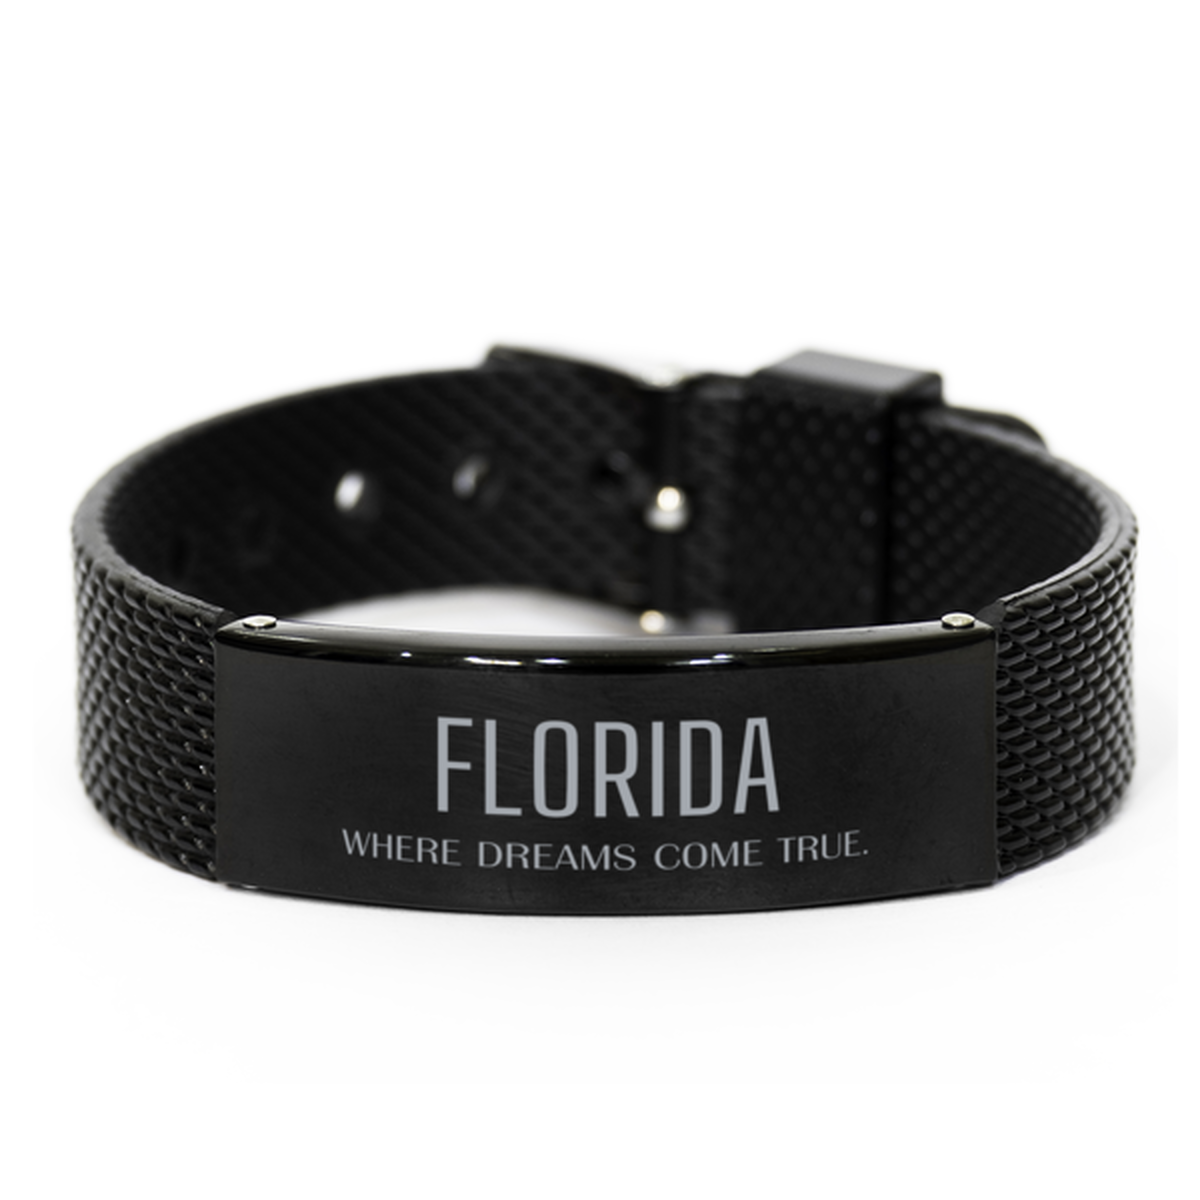 Love Florida State Black Shark Mesh Bracelet, Florida Where dreams come true, Birthday Inspirational Gifts For Florida Men, Women, Friends